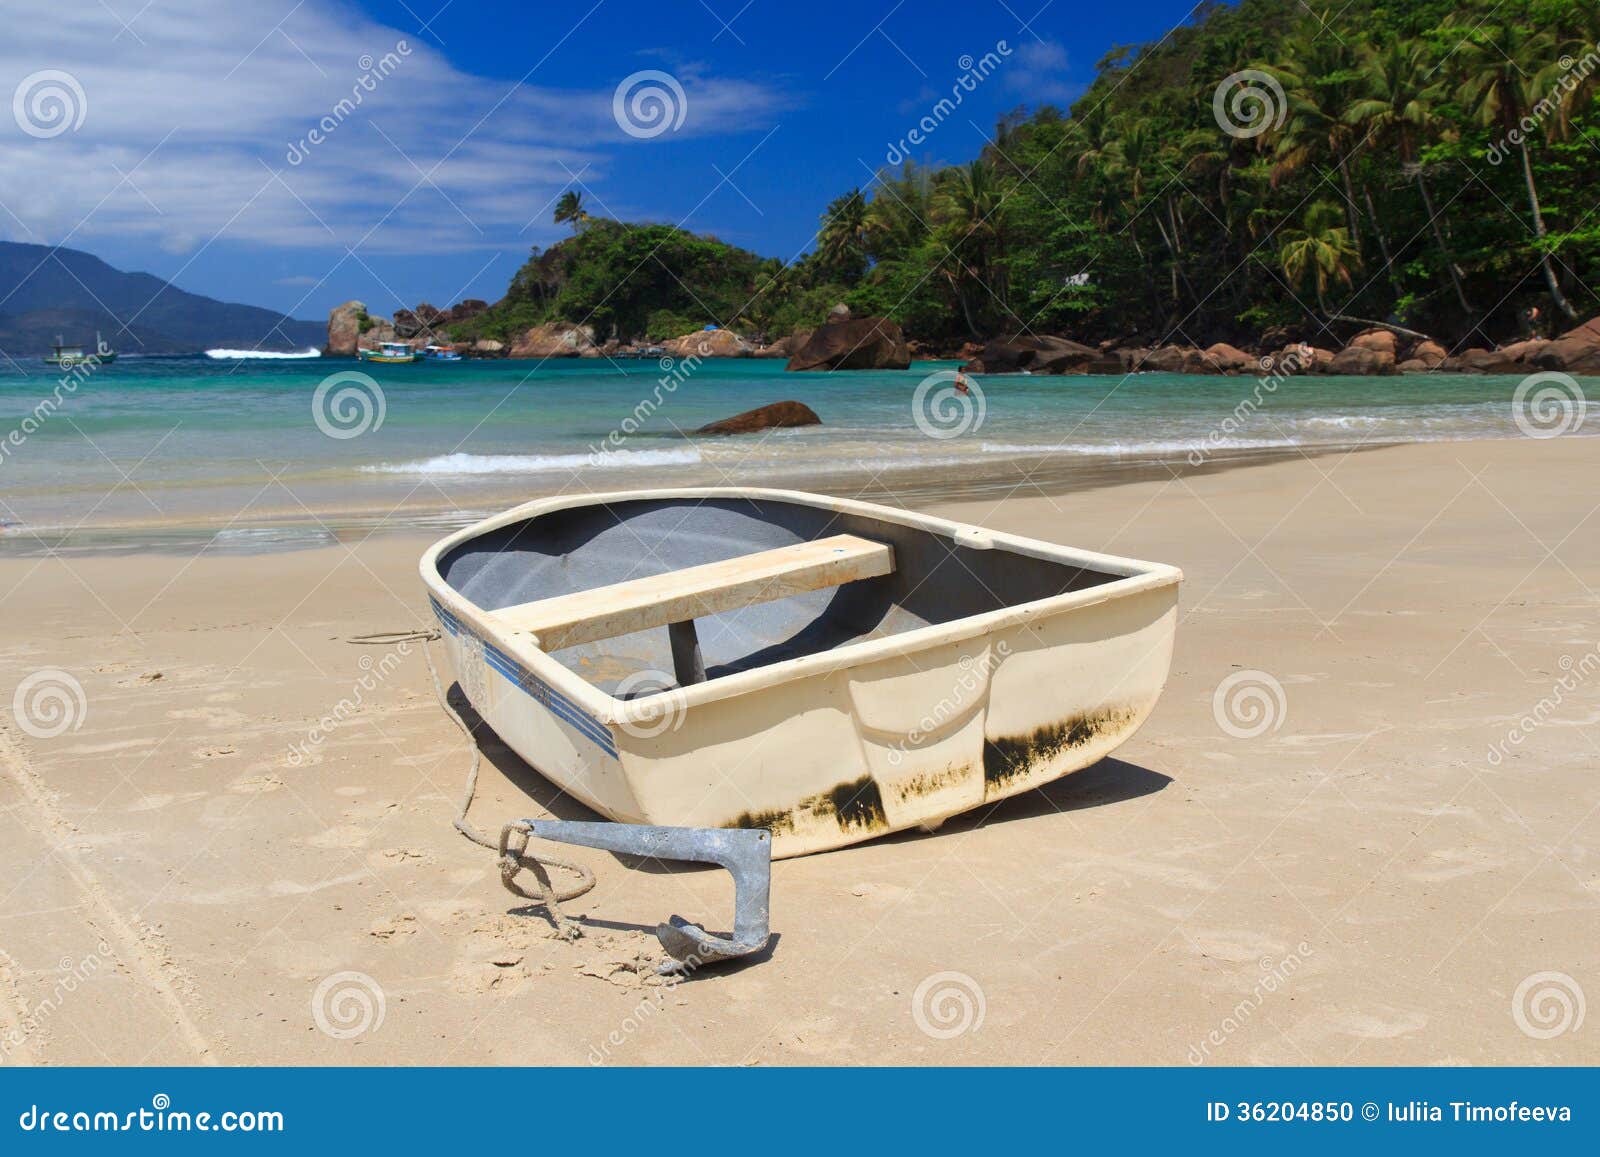 boat on beach aventueiro of island ilha grande, br